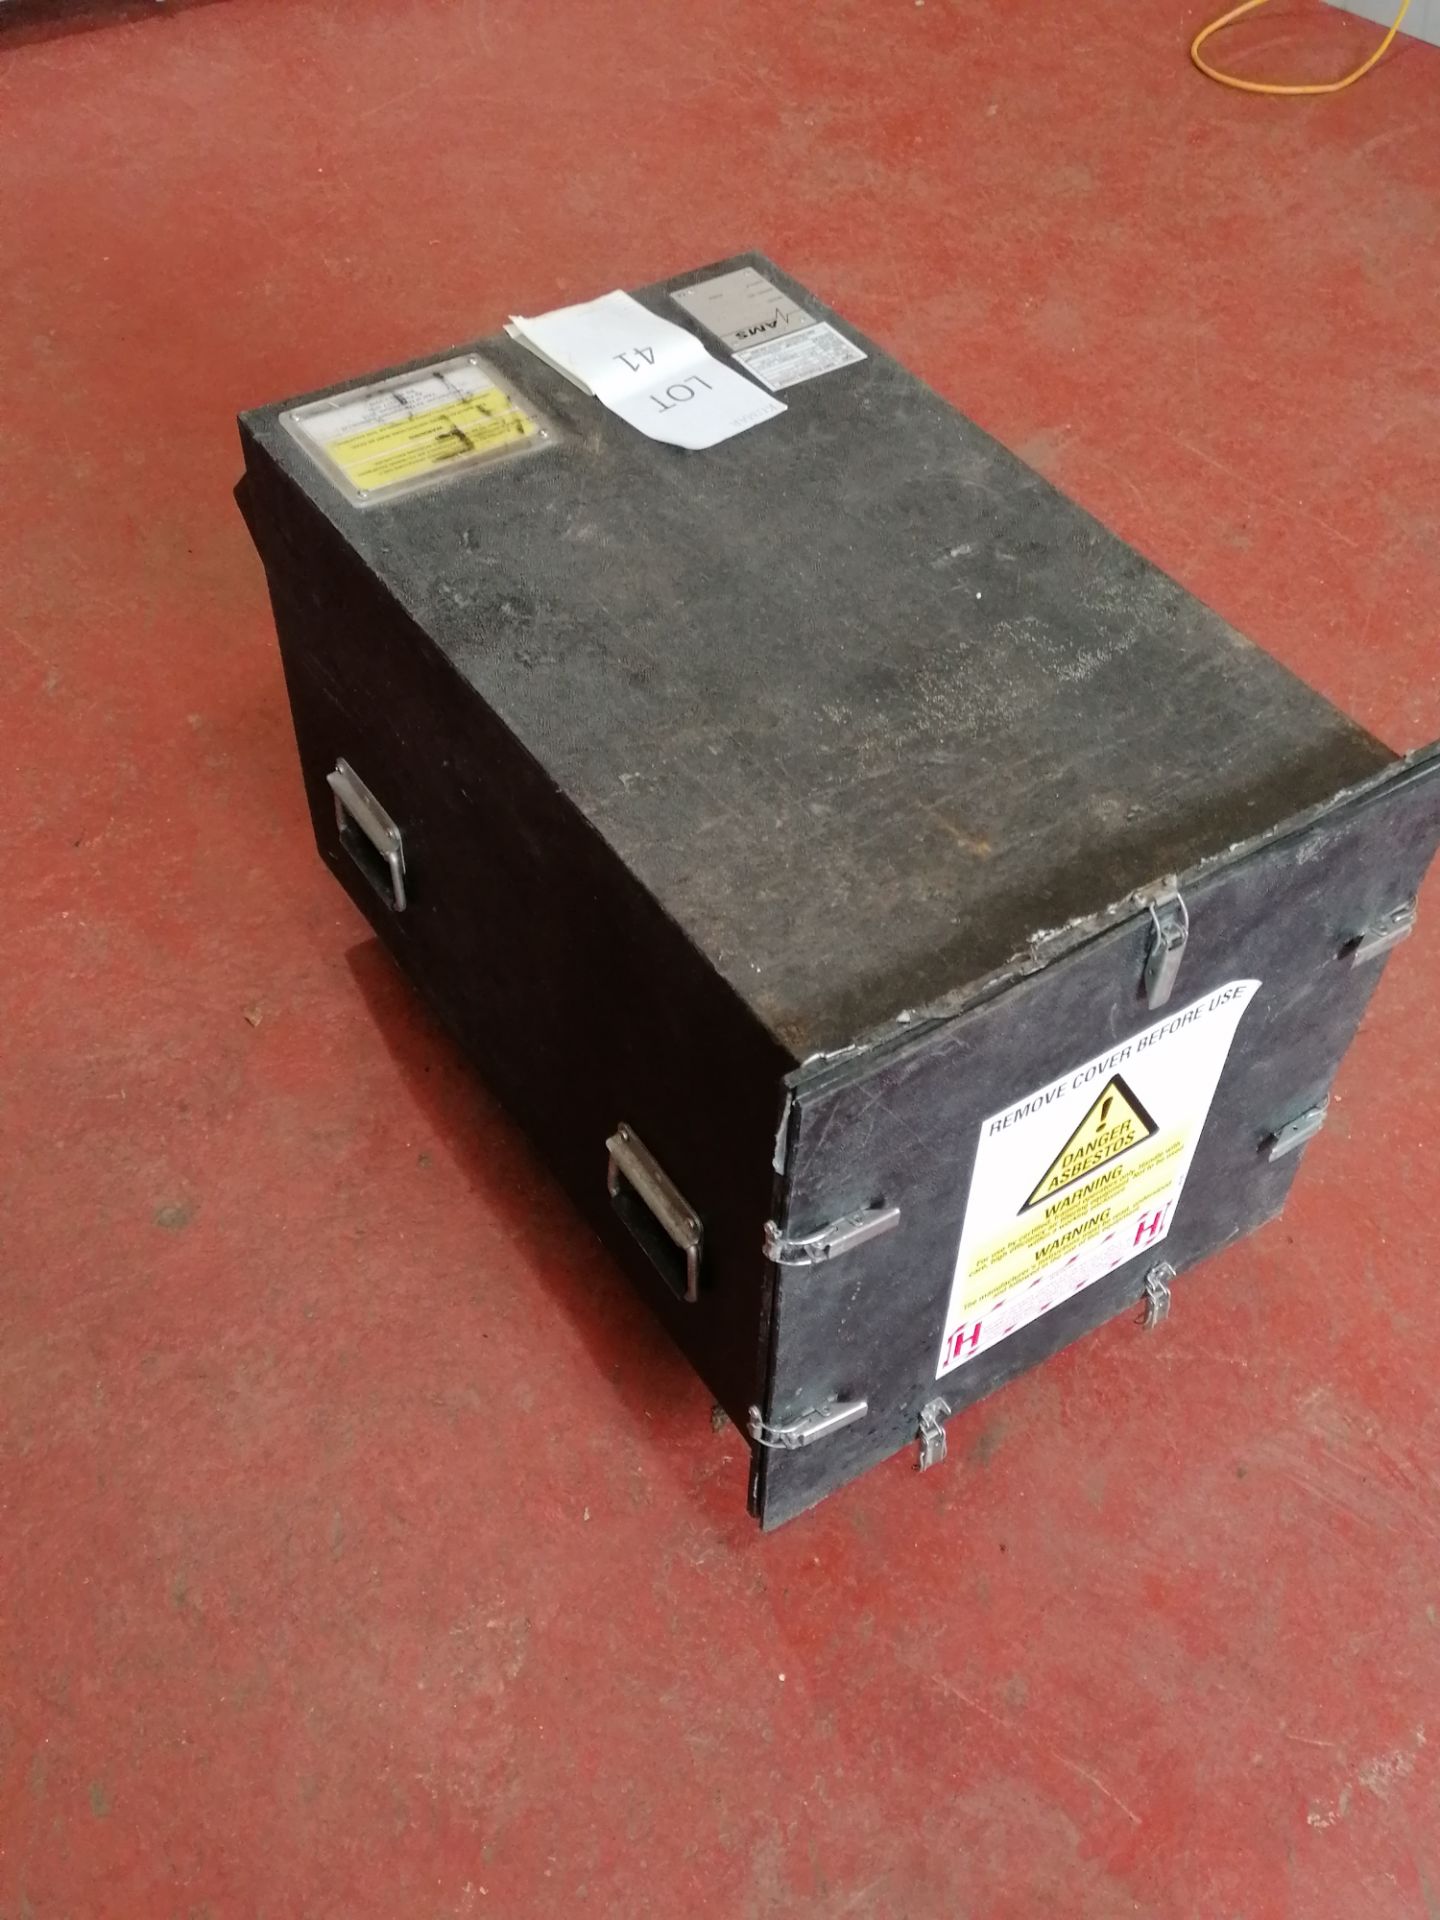 SMH NPU 1500 Extractor/Filter Unit 110V, Serial No. 22888 - Image 4 of 6